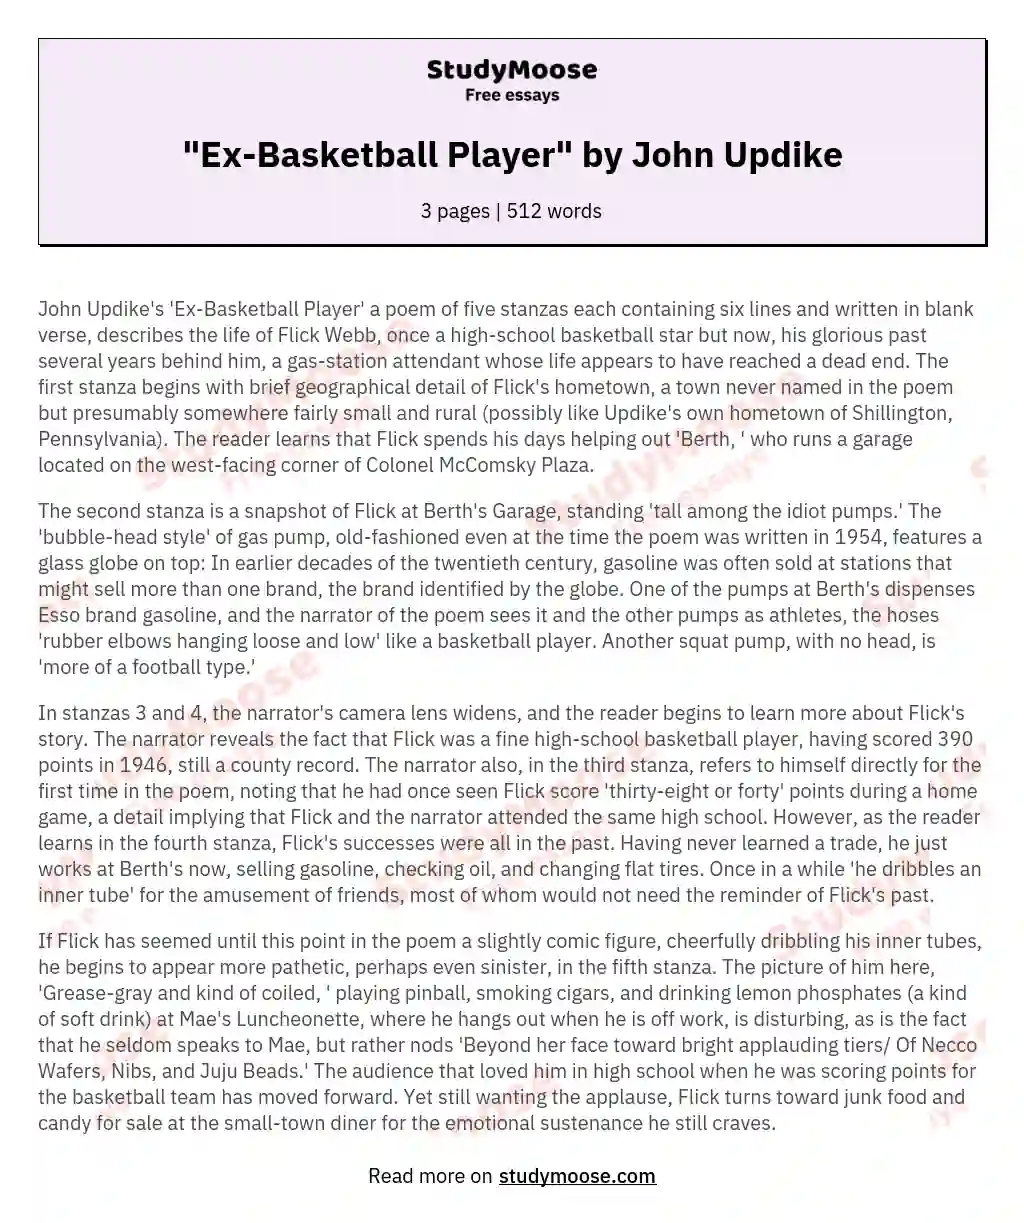 "Ex-Basketball Player" by John Updike essay